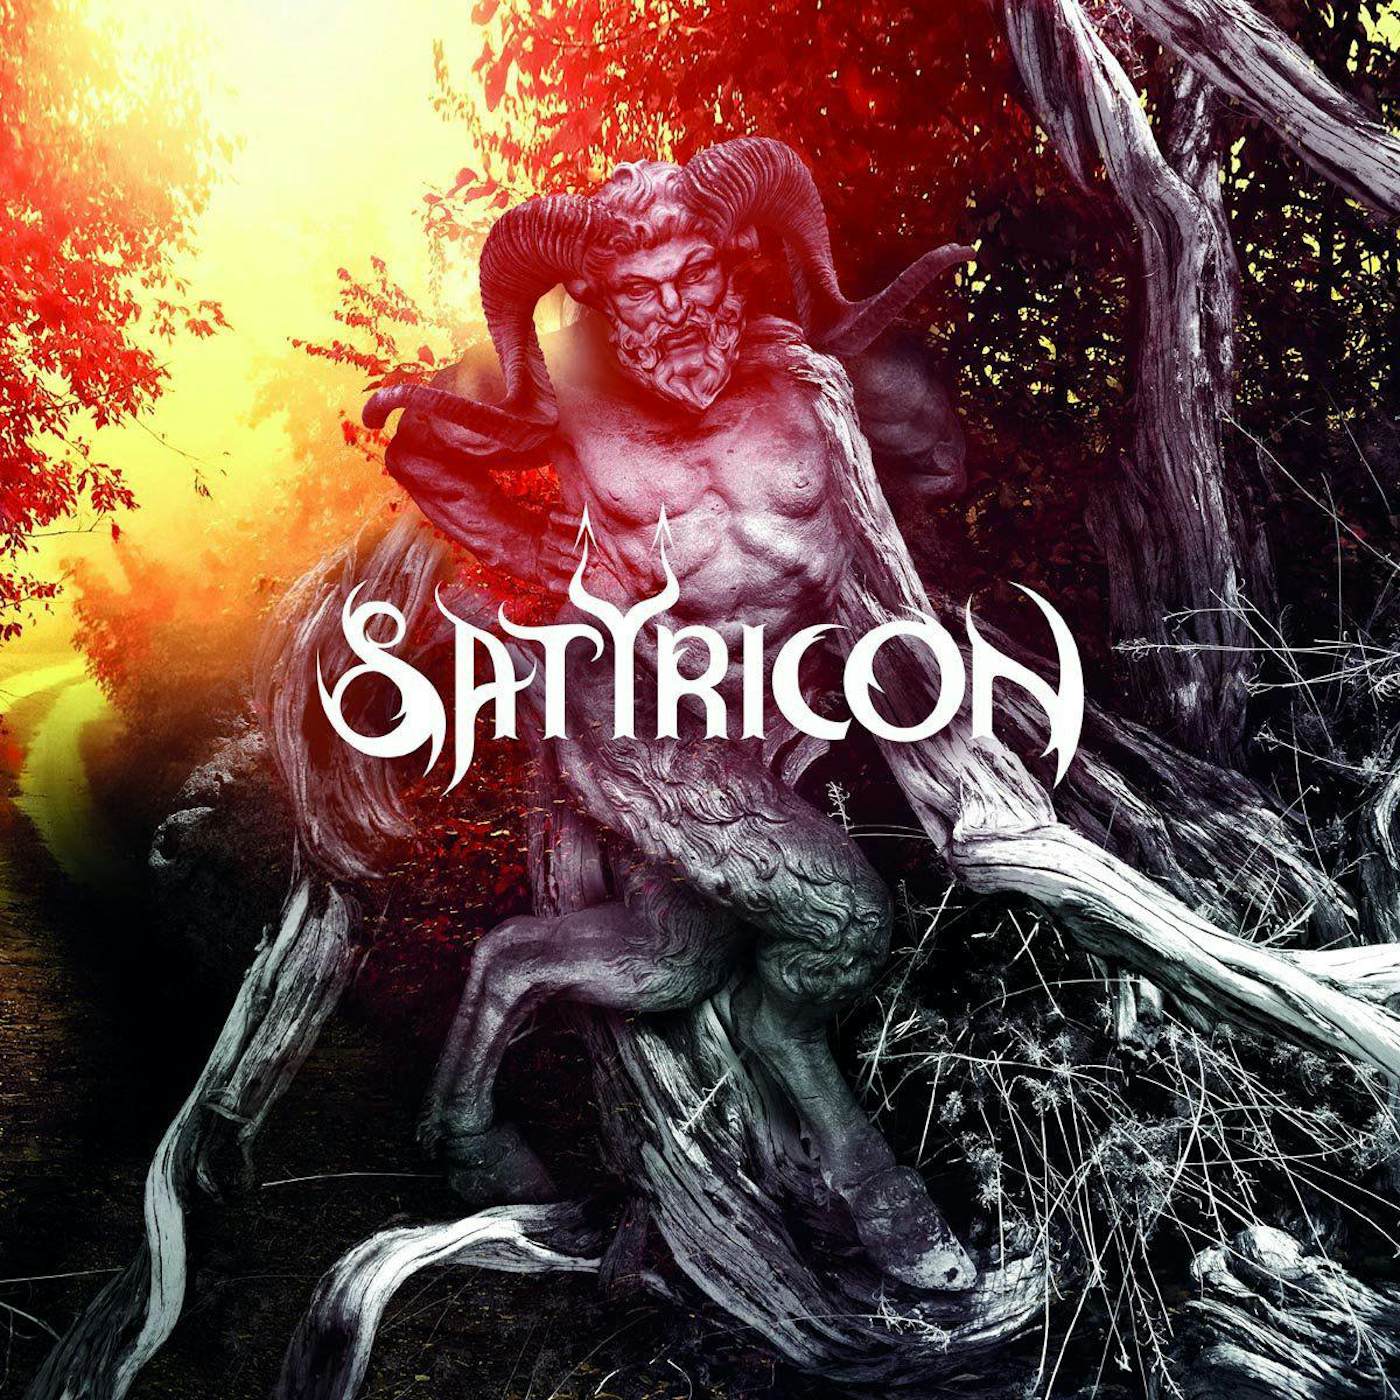 Satyricon Vinyl Record